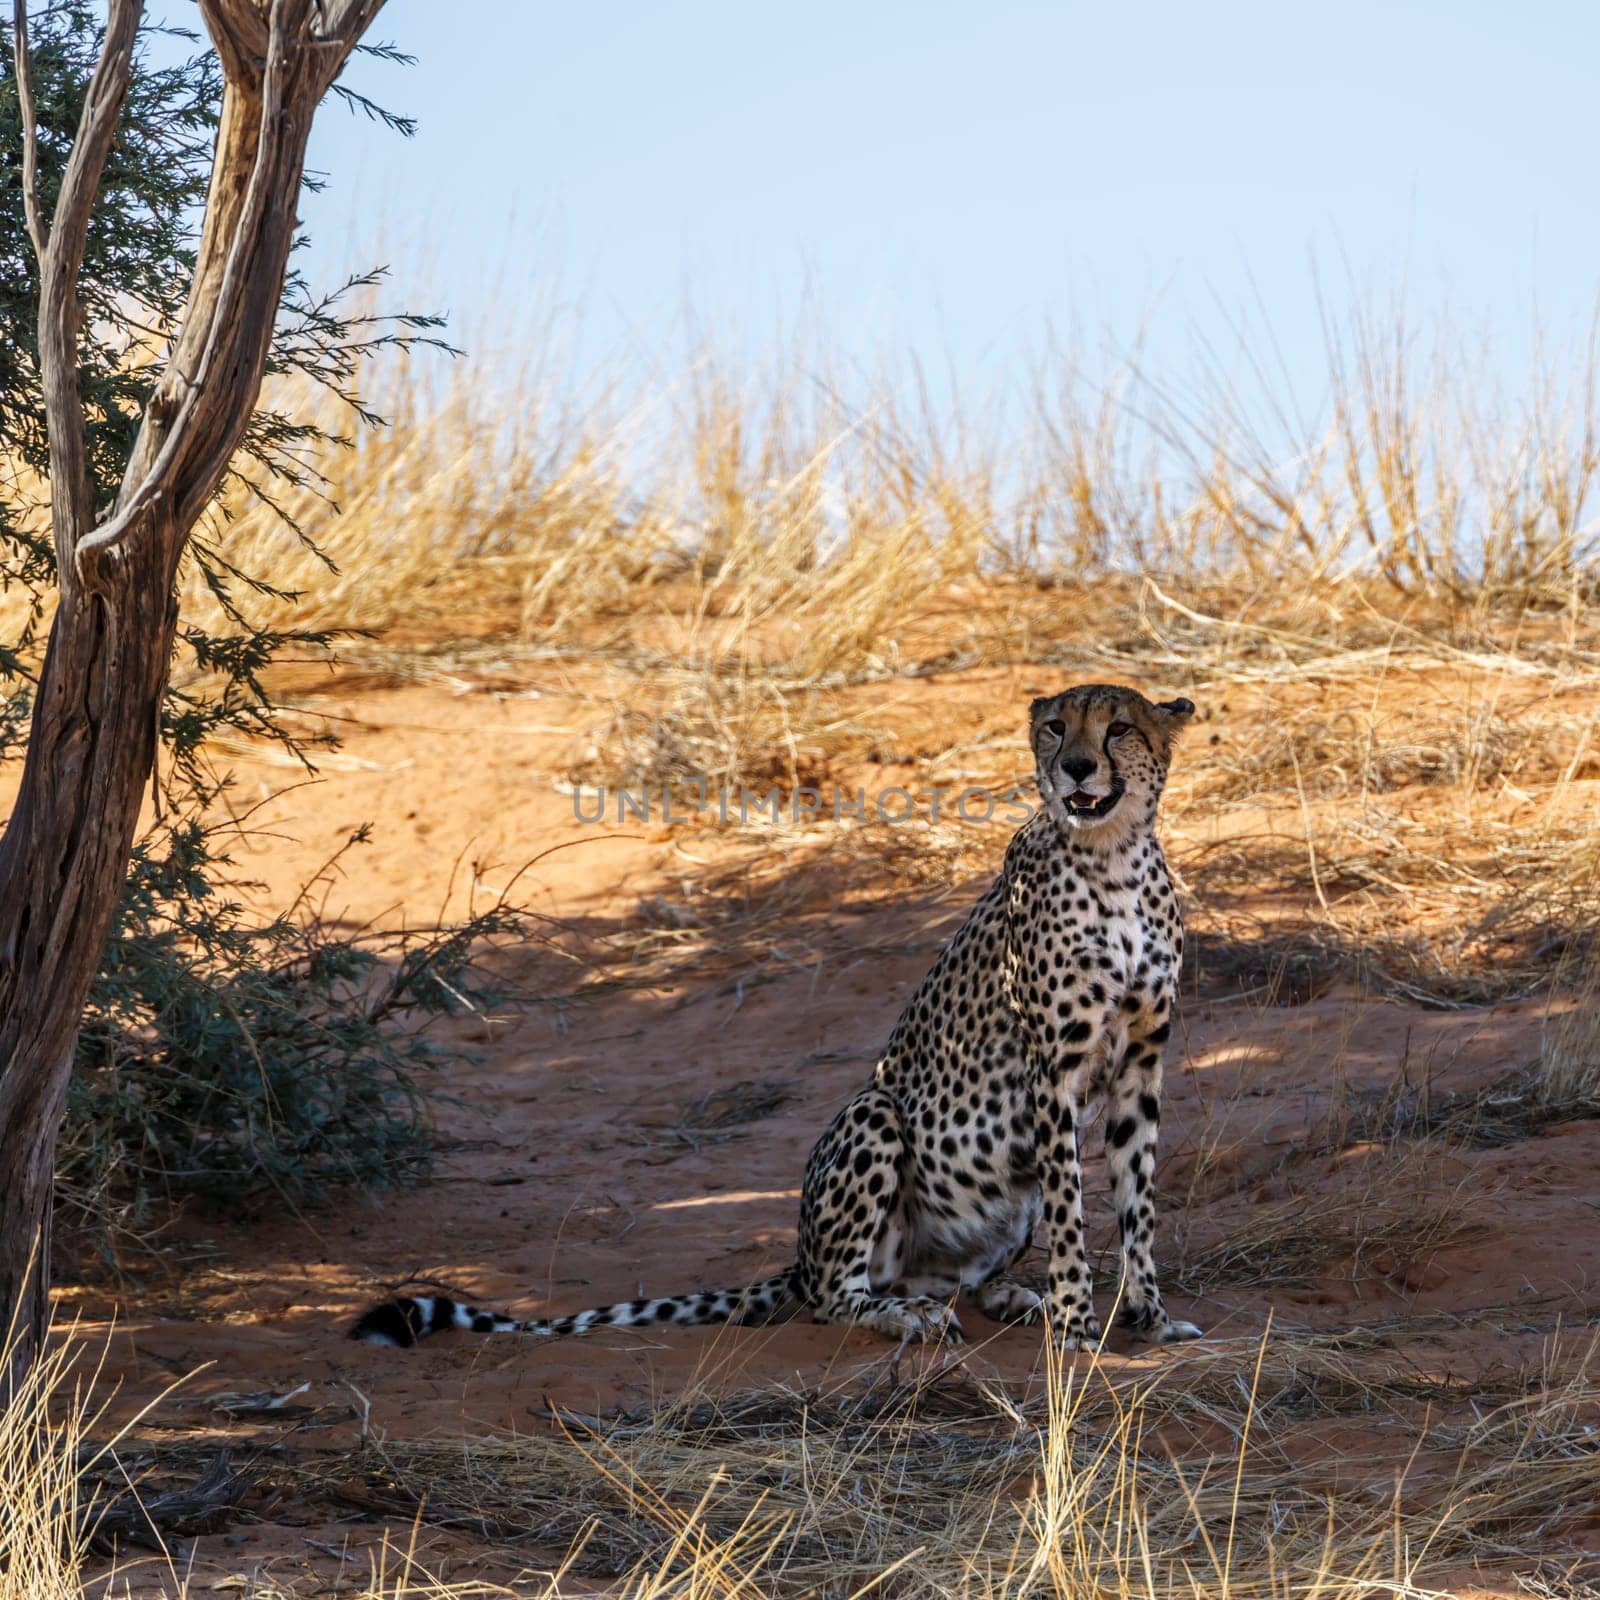 Cheetah sitting under tree shadow in Kgalagadi transfrontier park, South Africa ; Specie Acinonyx jubatus family of Felidae